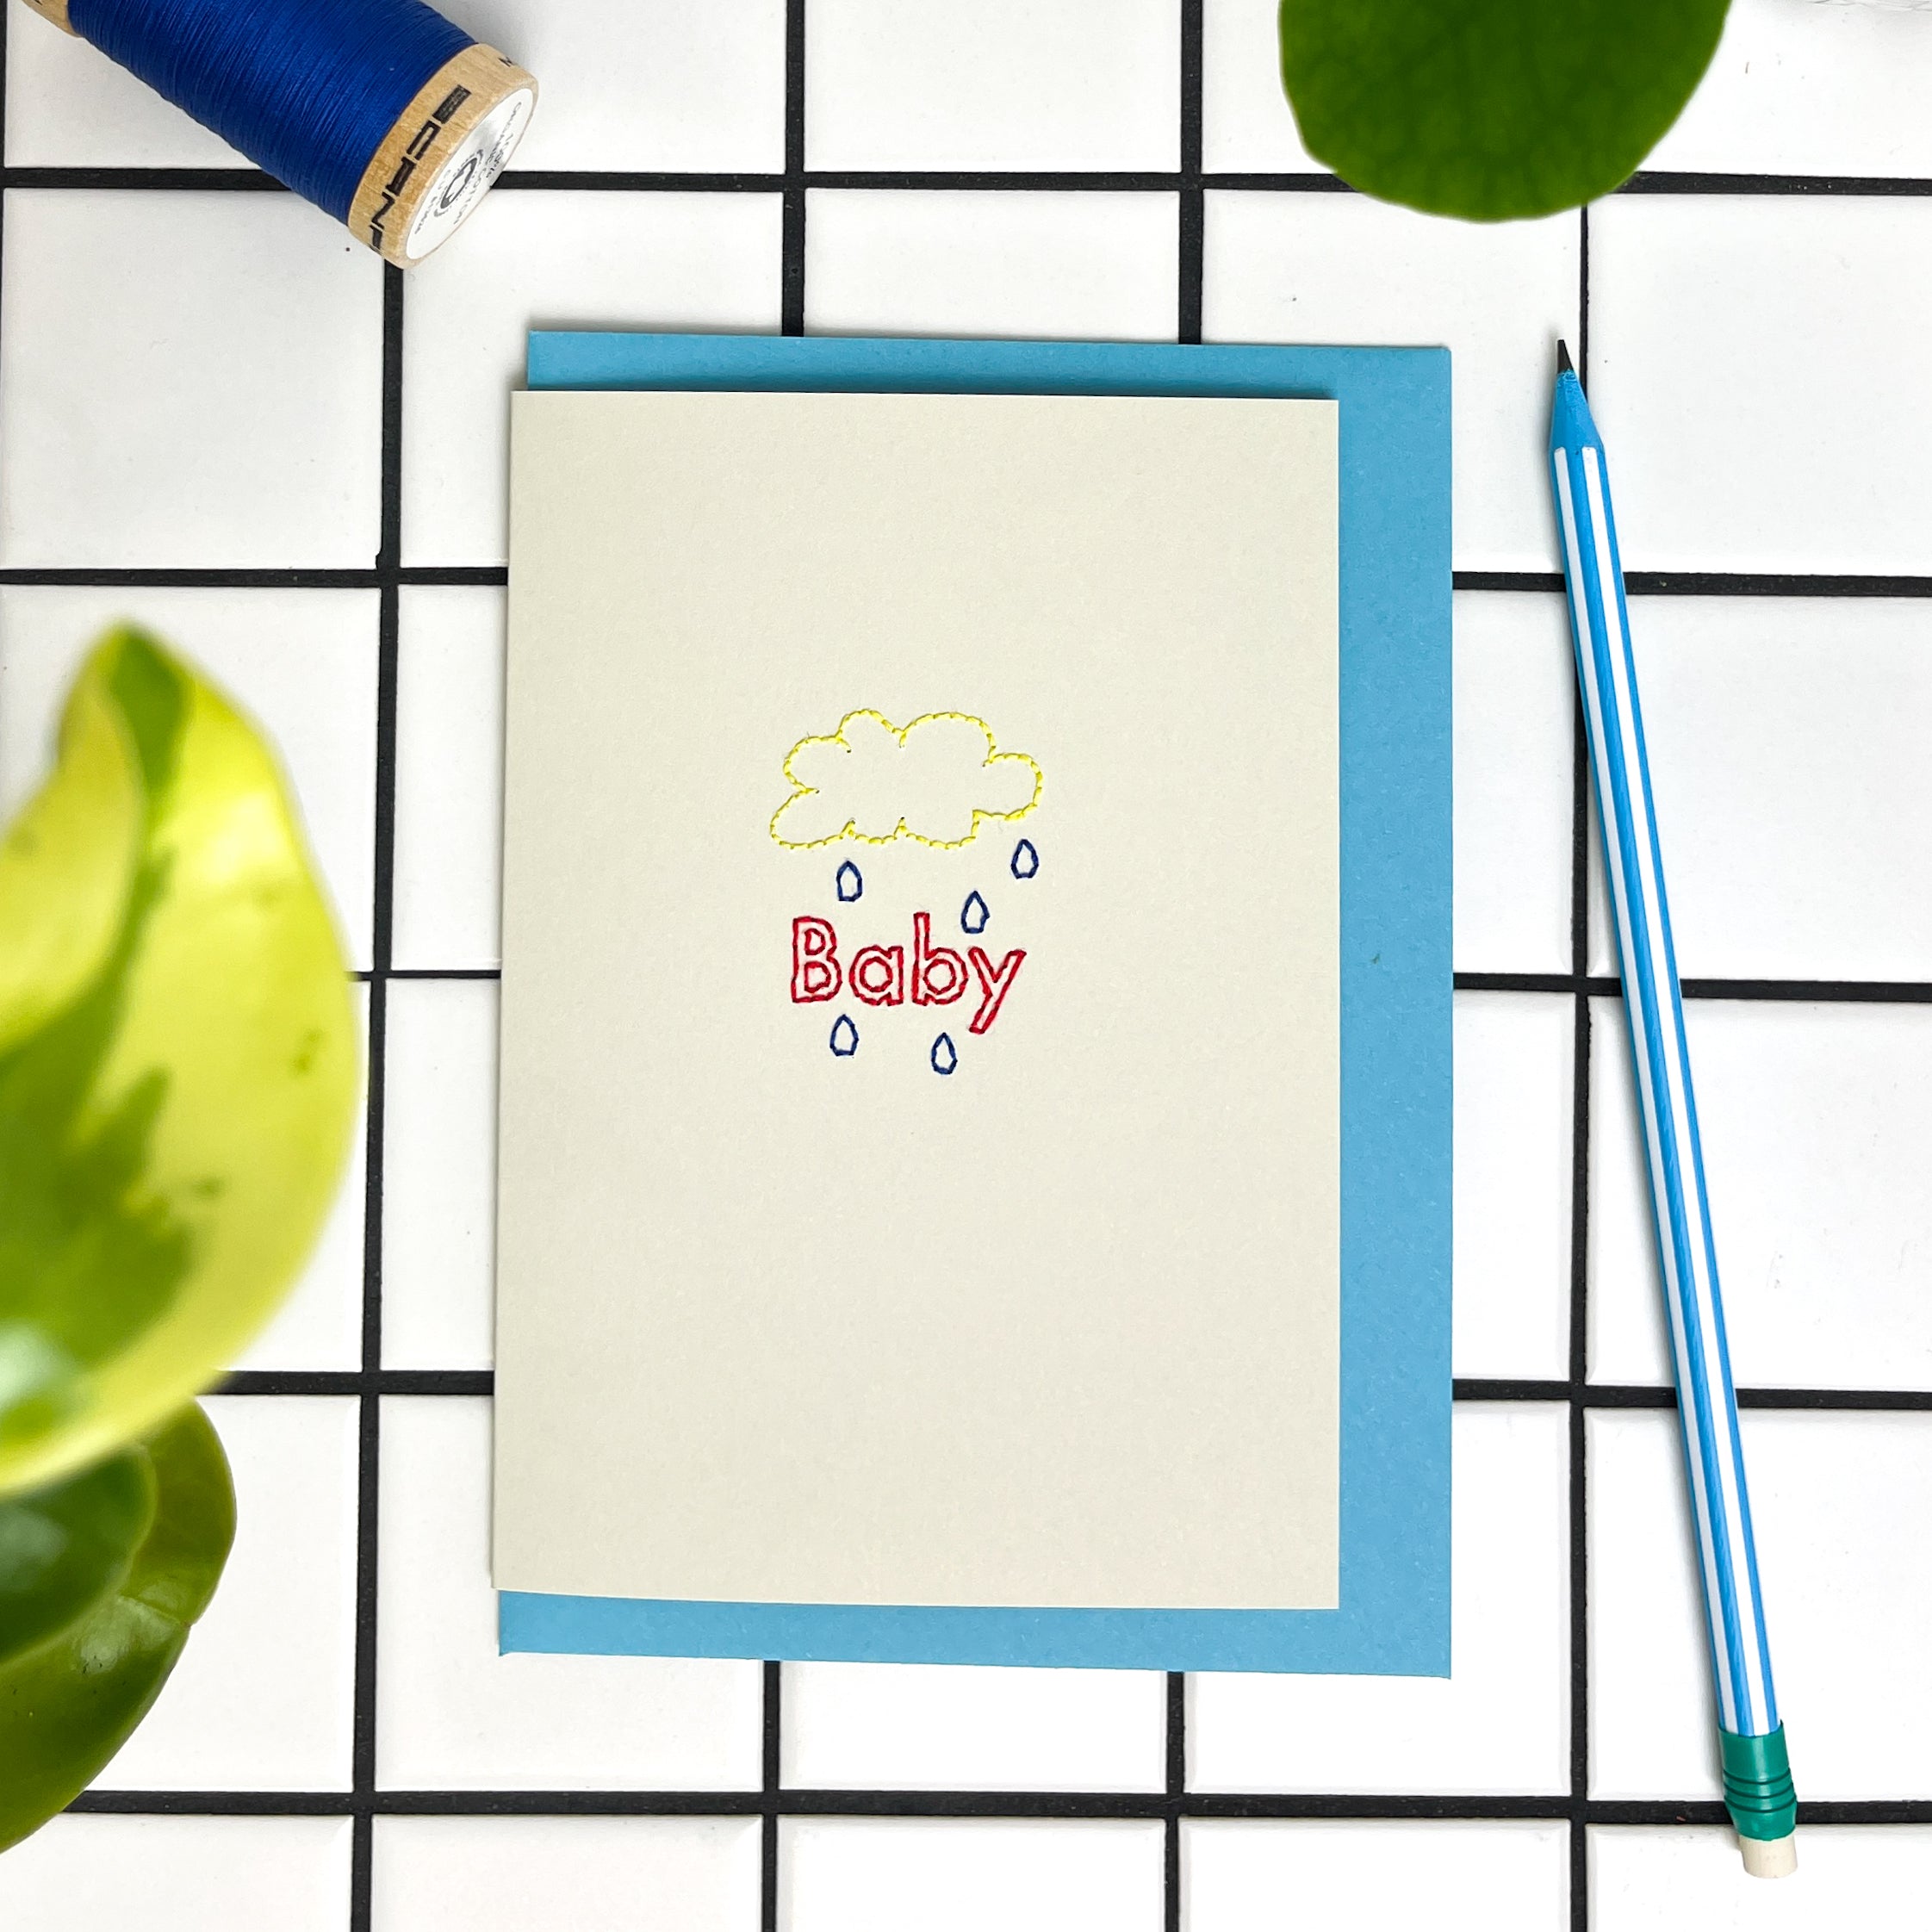 'Baby Shower' card